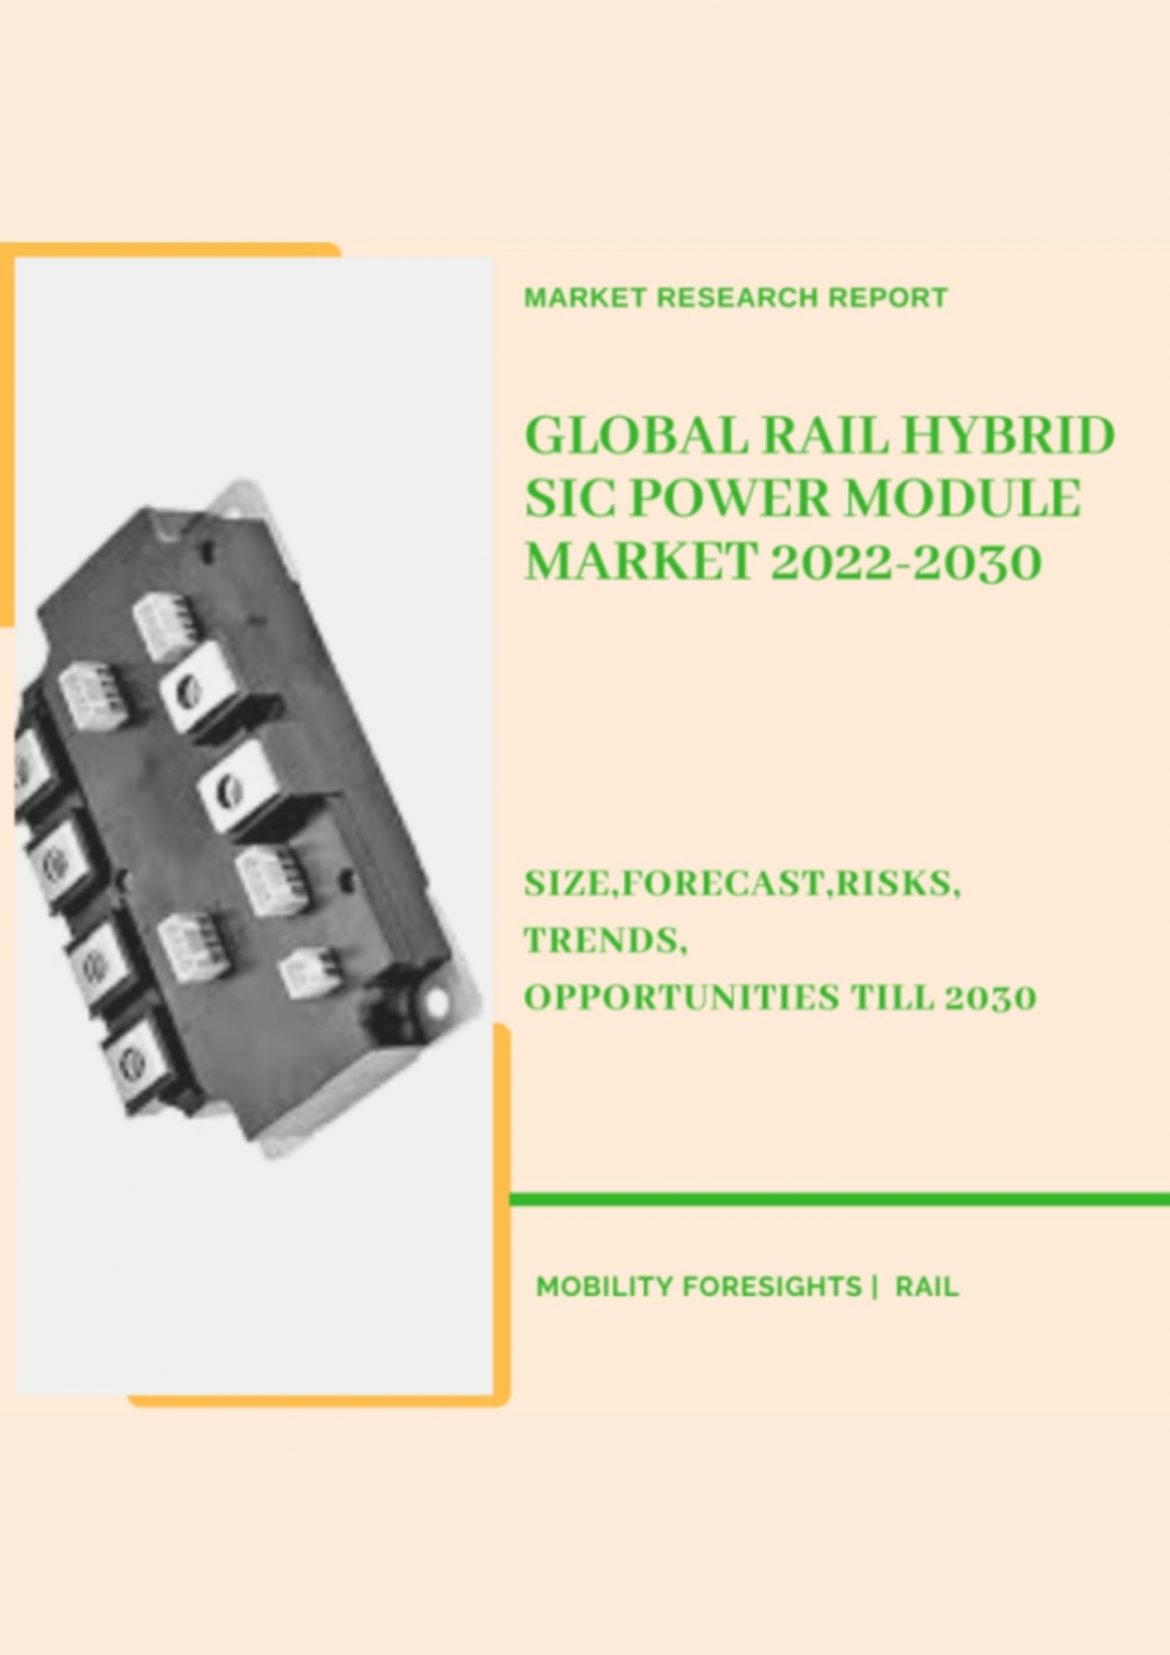 Global Rail Hybrid Sic Power Module Market 2022-2030